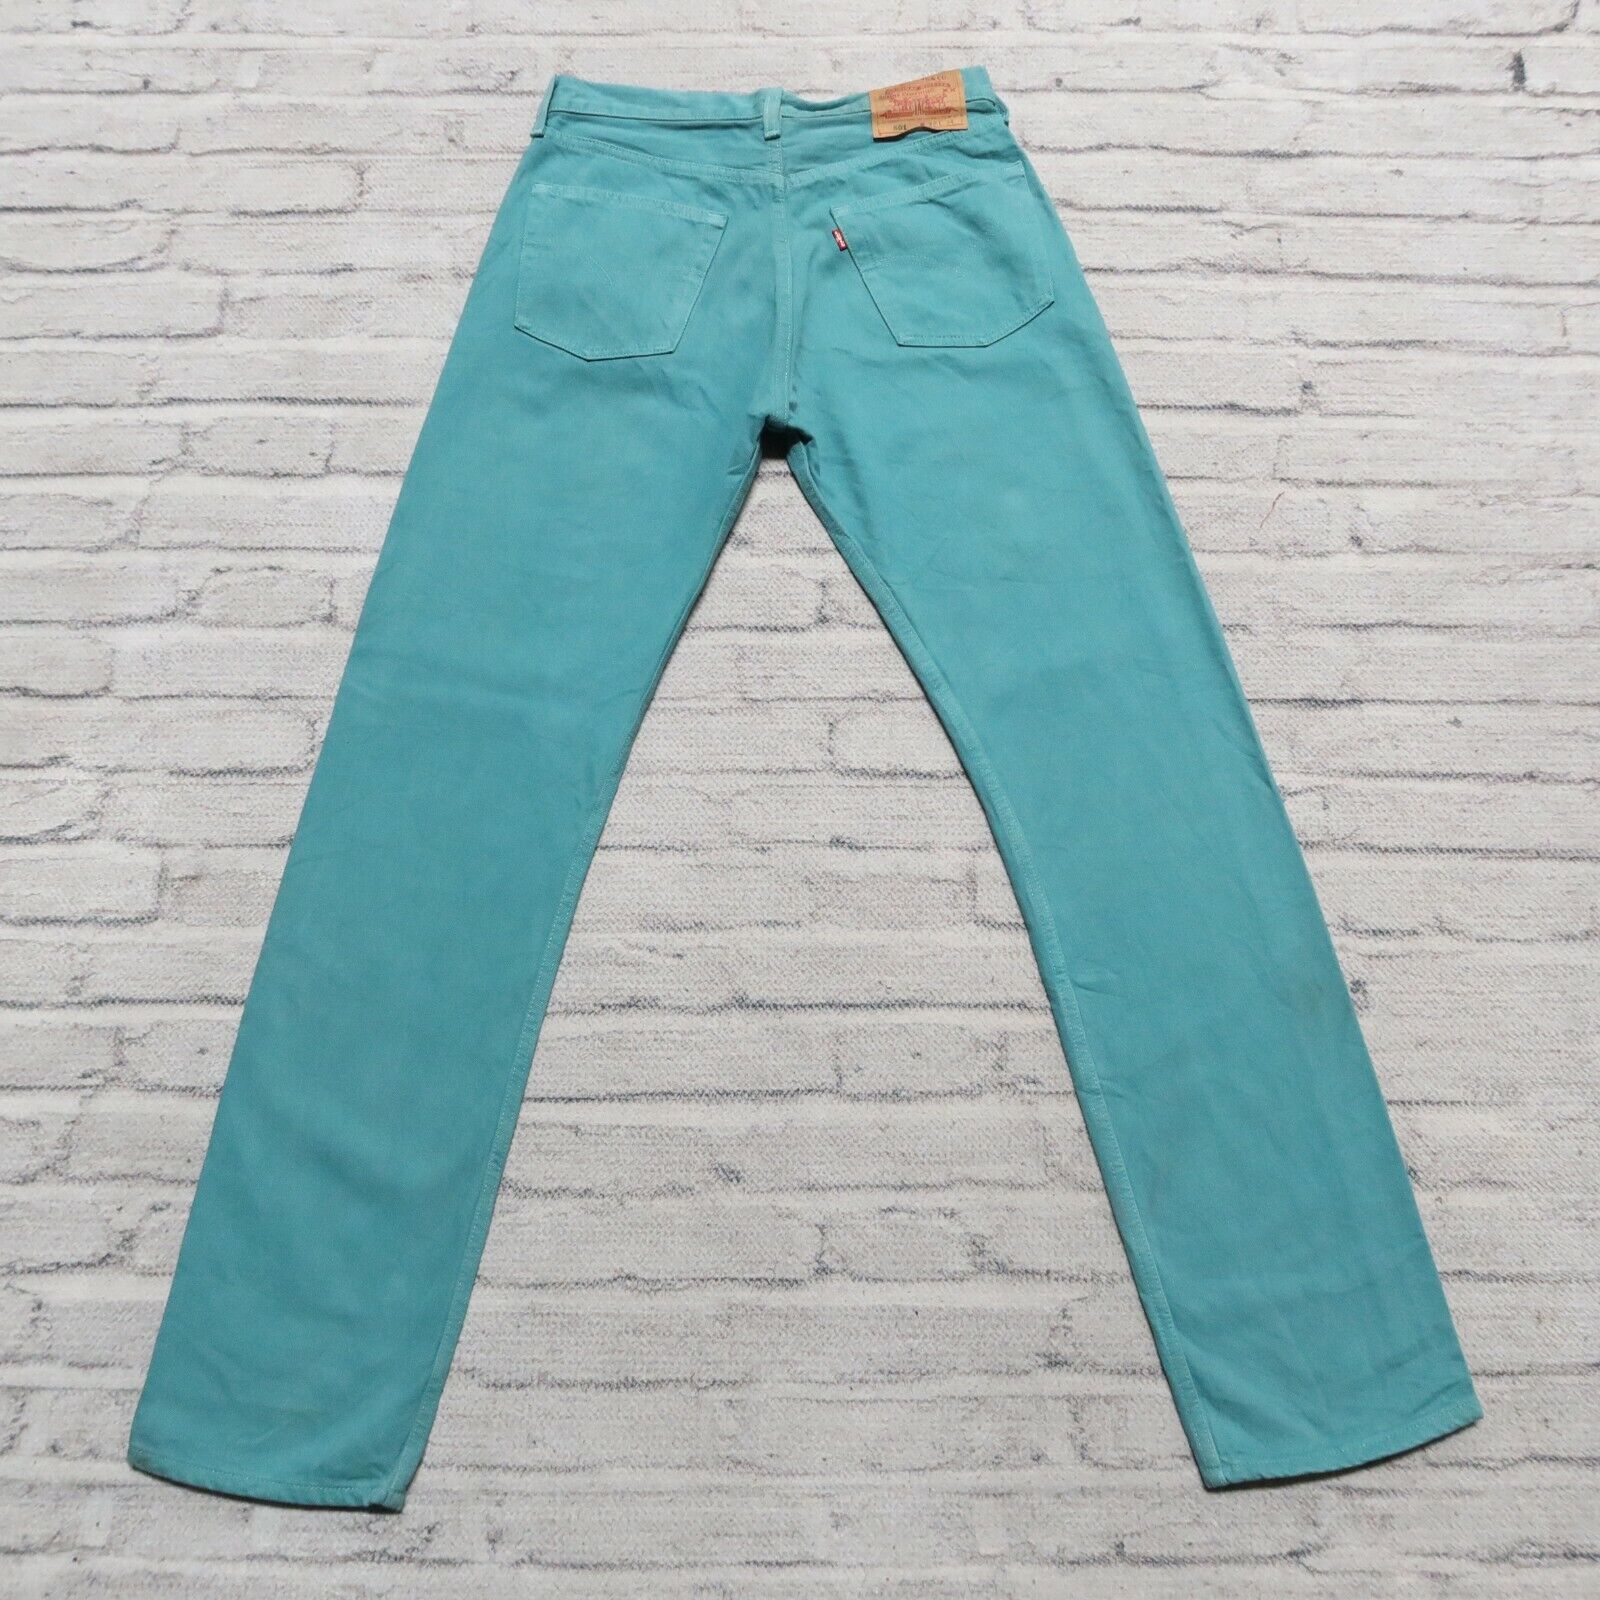 Vintage 90s Levis 501 Denim Jeans Made in USA Size 30 31 Teal Aqua